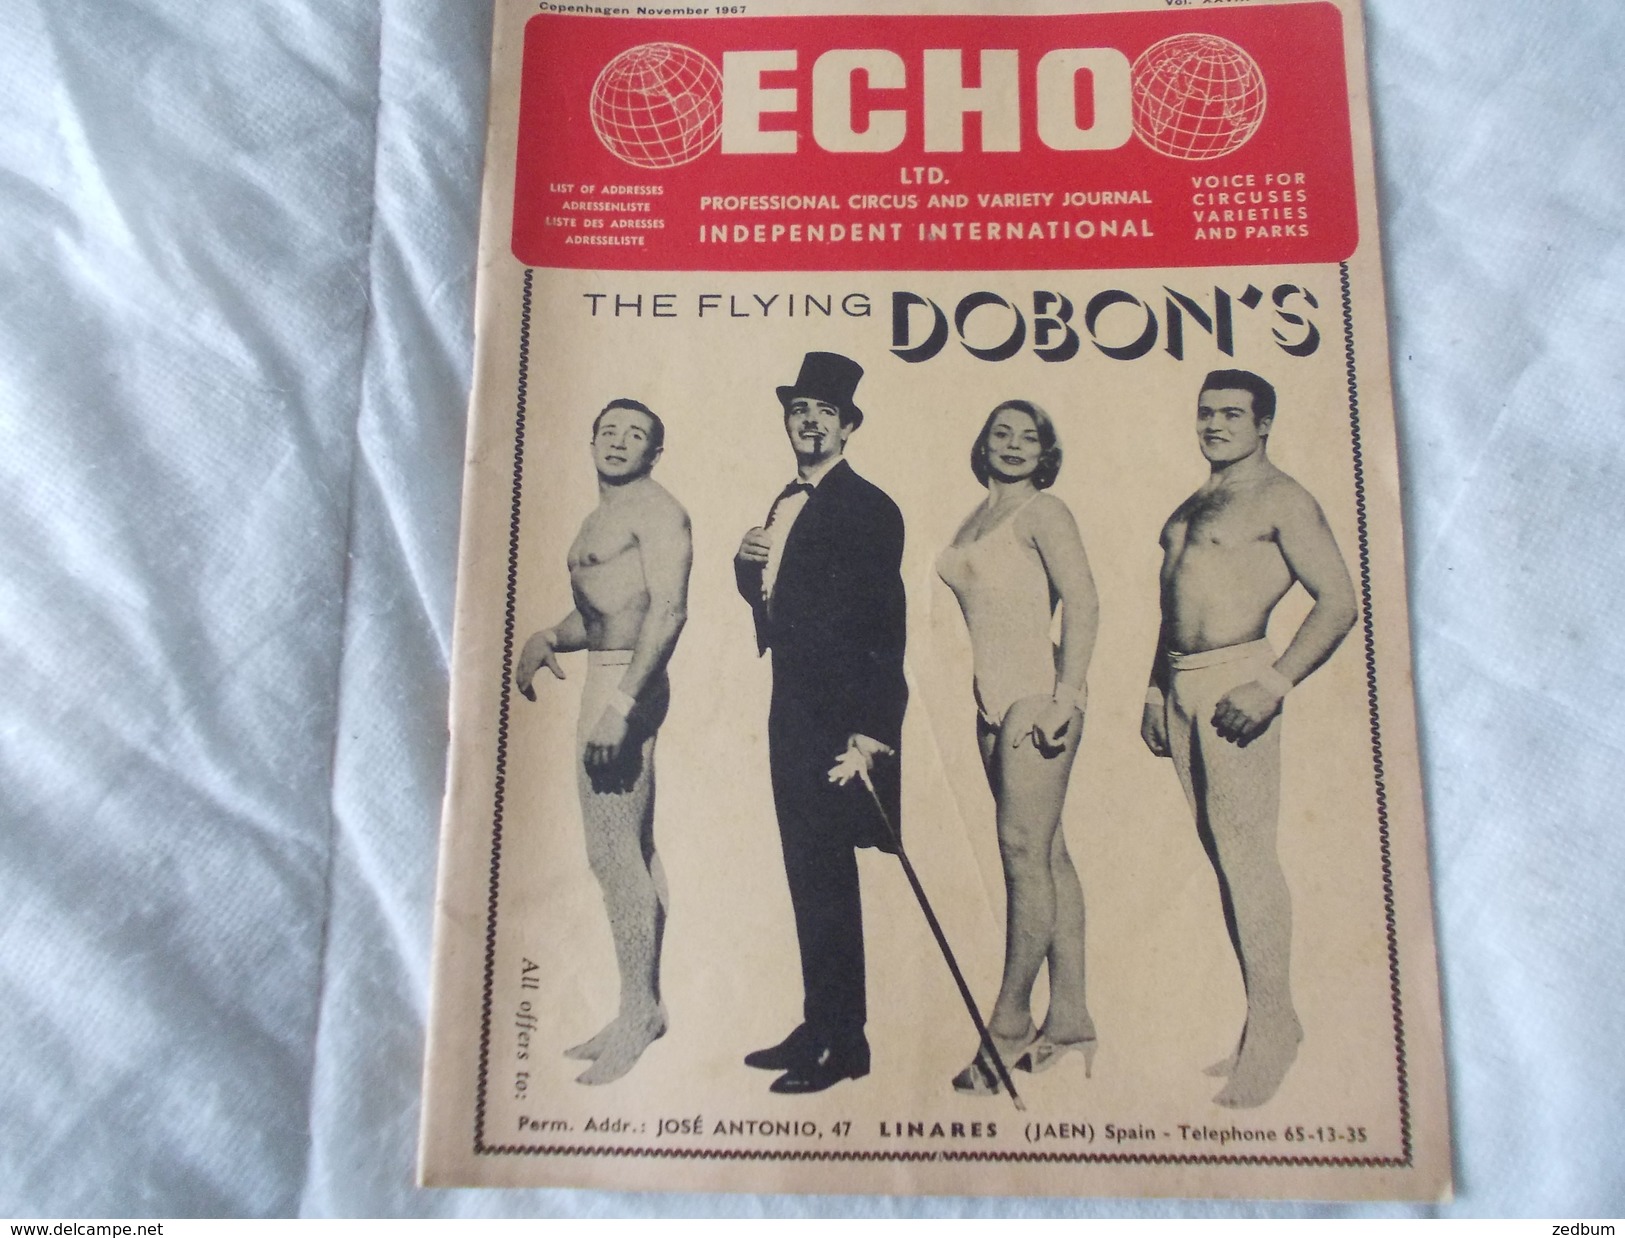 ECHO LTD Professional Circus And Variety Journal Independent International N° 309 November 1967 - Unterhaltung